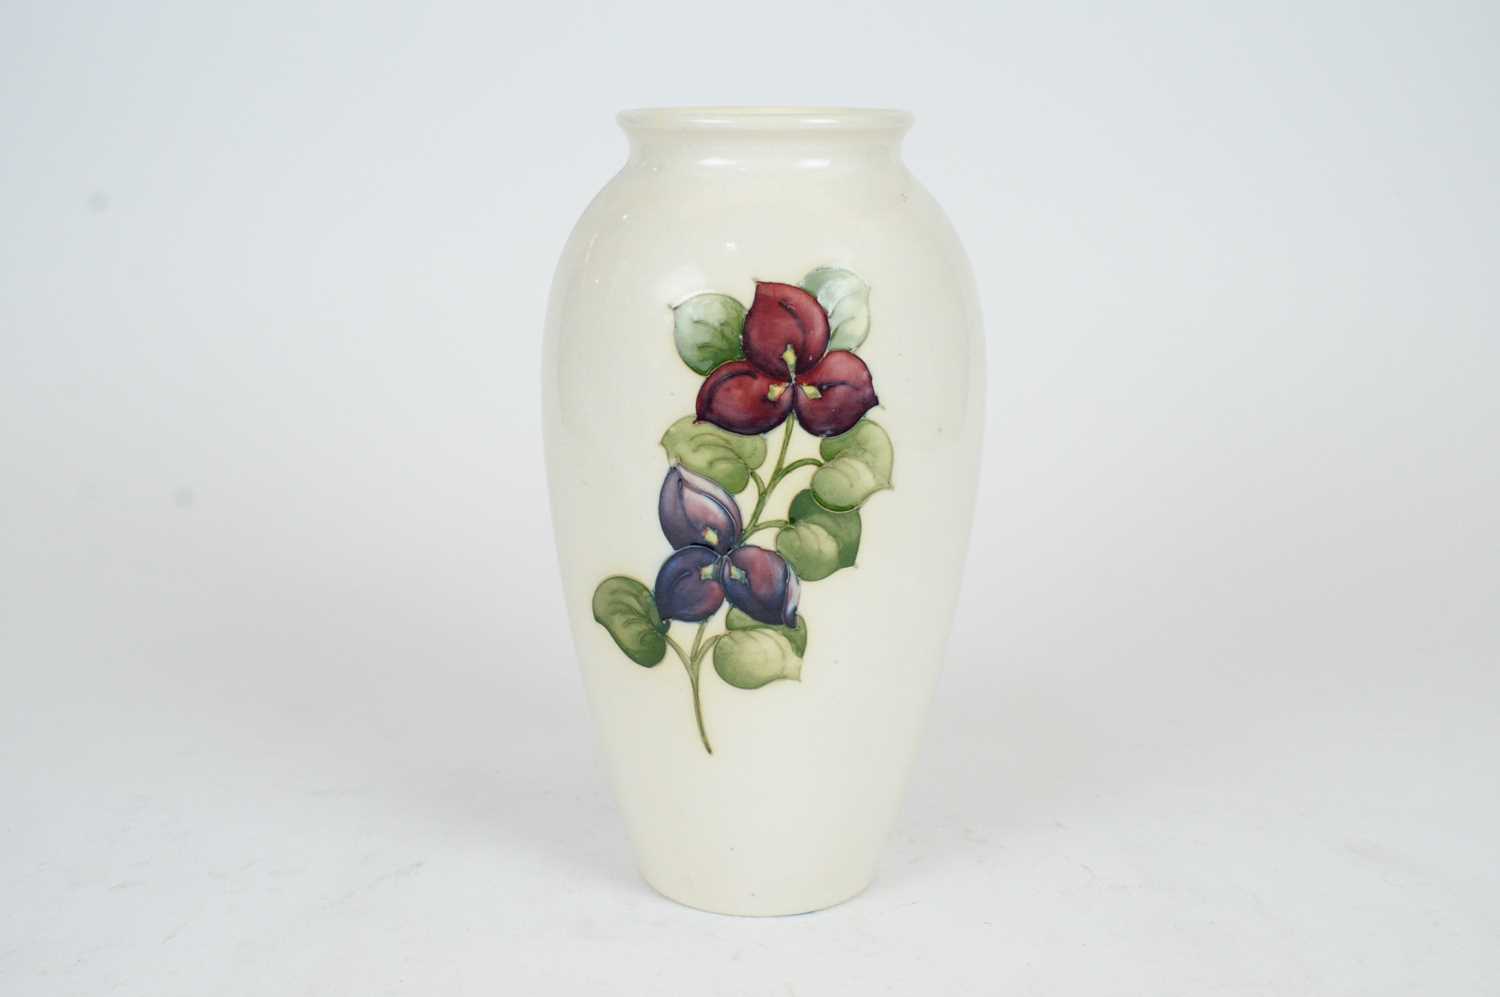 Moorcroft Bougainvillea vase - Image 2 of 3